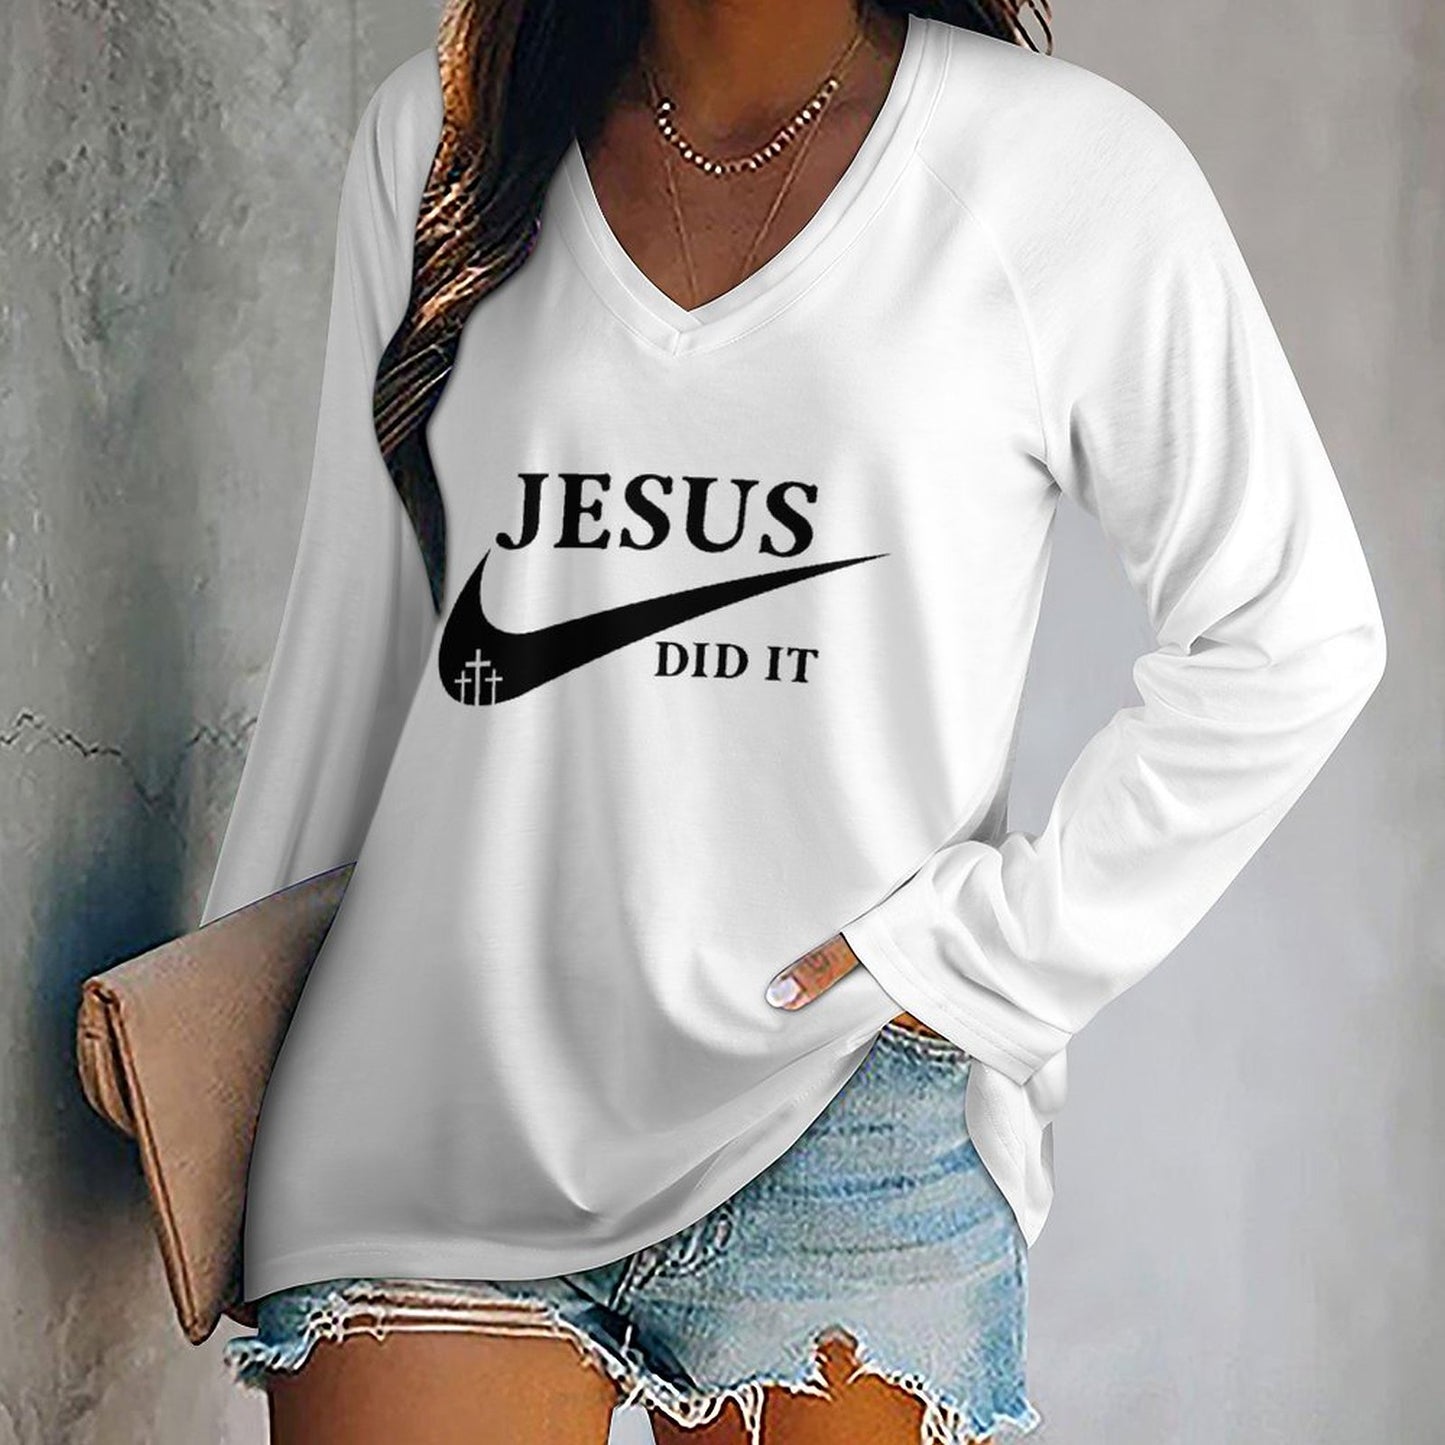 Jesus Did It (Like Nike) V Neck Women's Christian Pullover Sweatshirt SALE-Personal Design